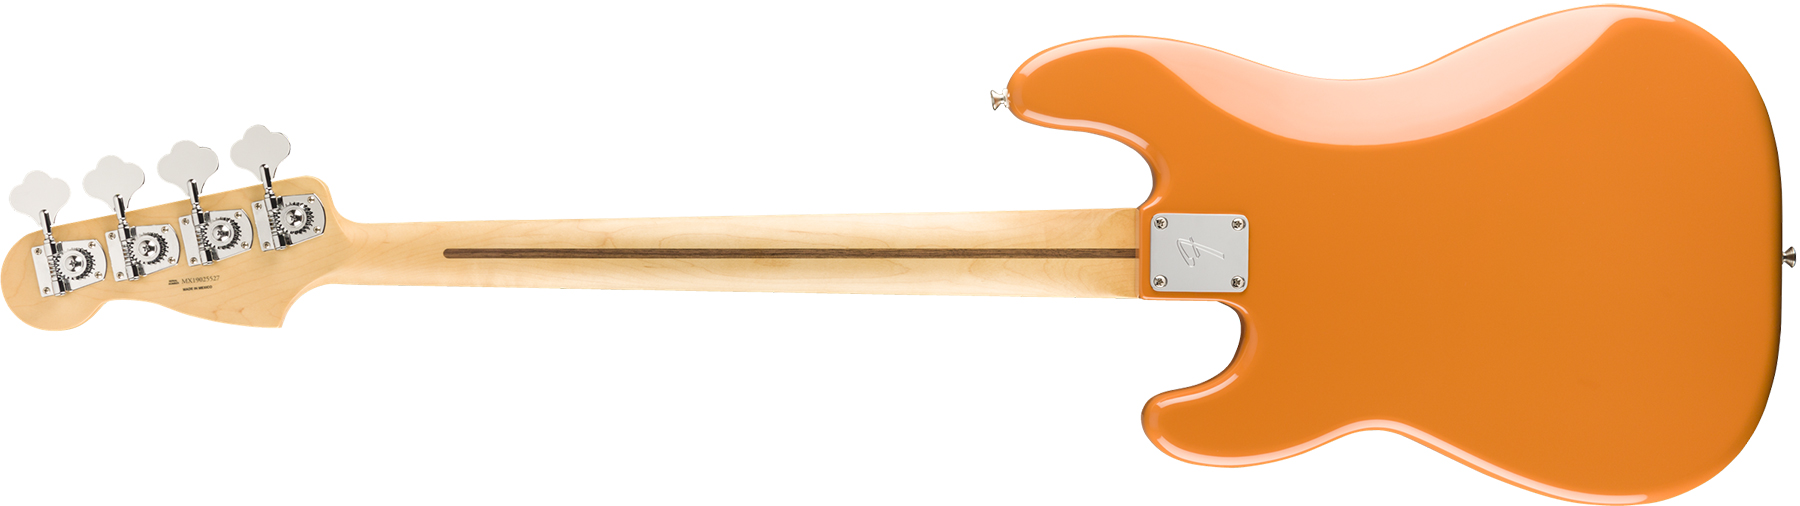 Fender Precision Bass Player Mex Pf - Capri Orange - Solid body elektrische bas - Variation 1